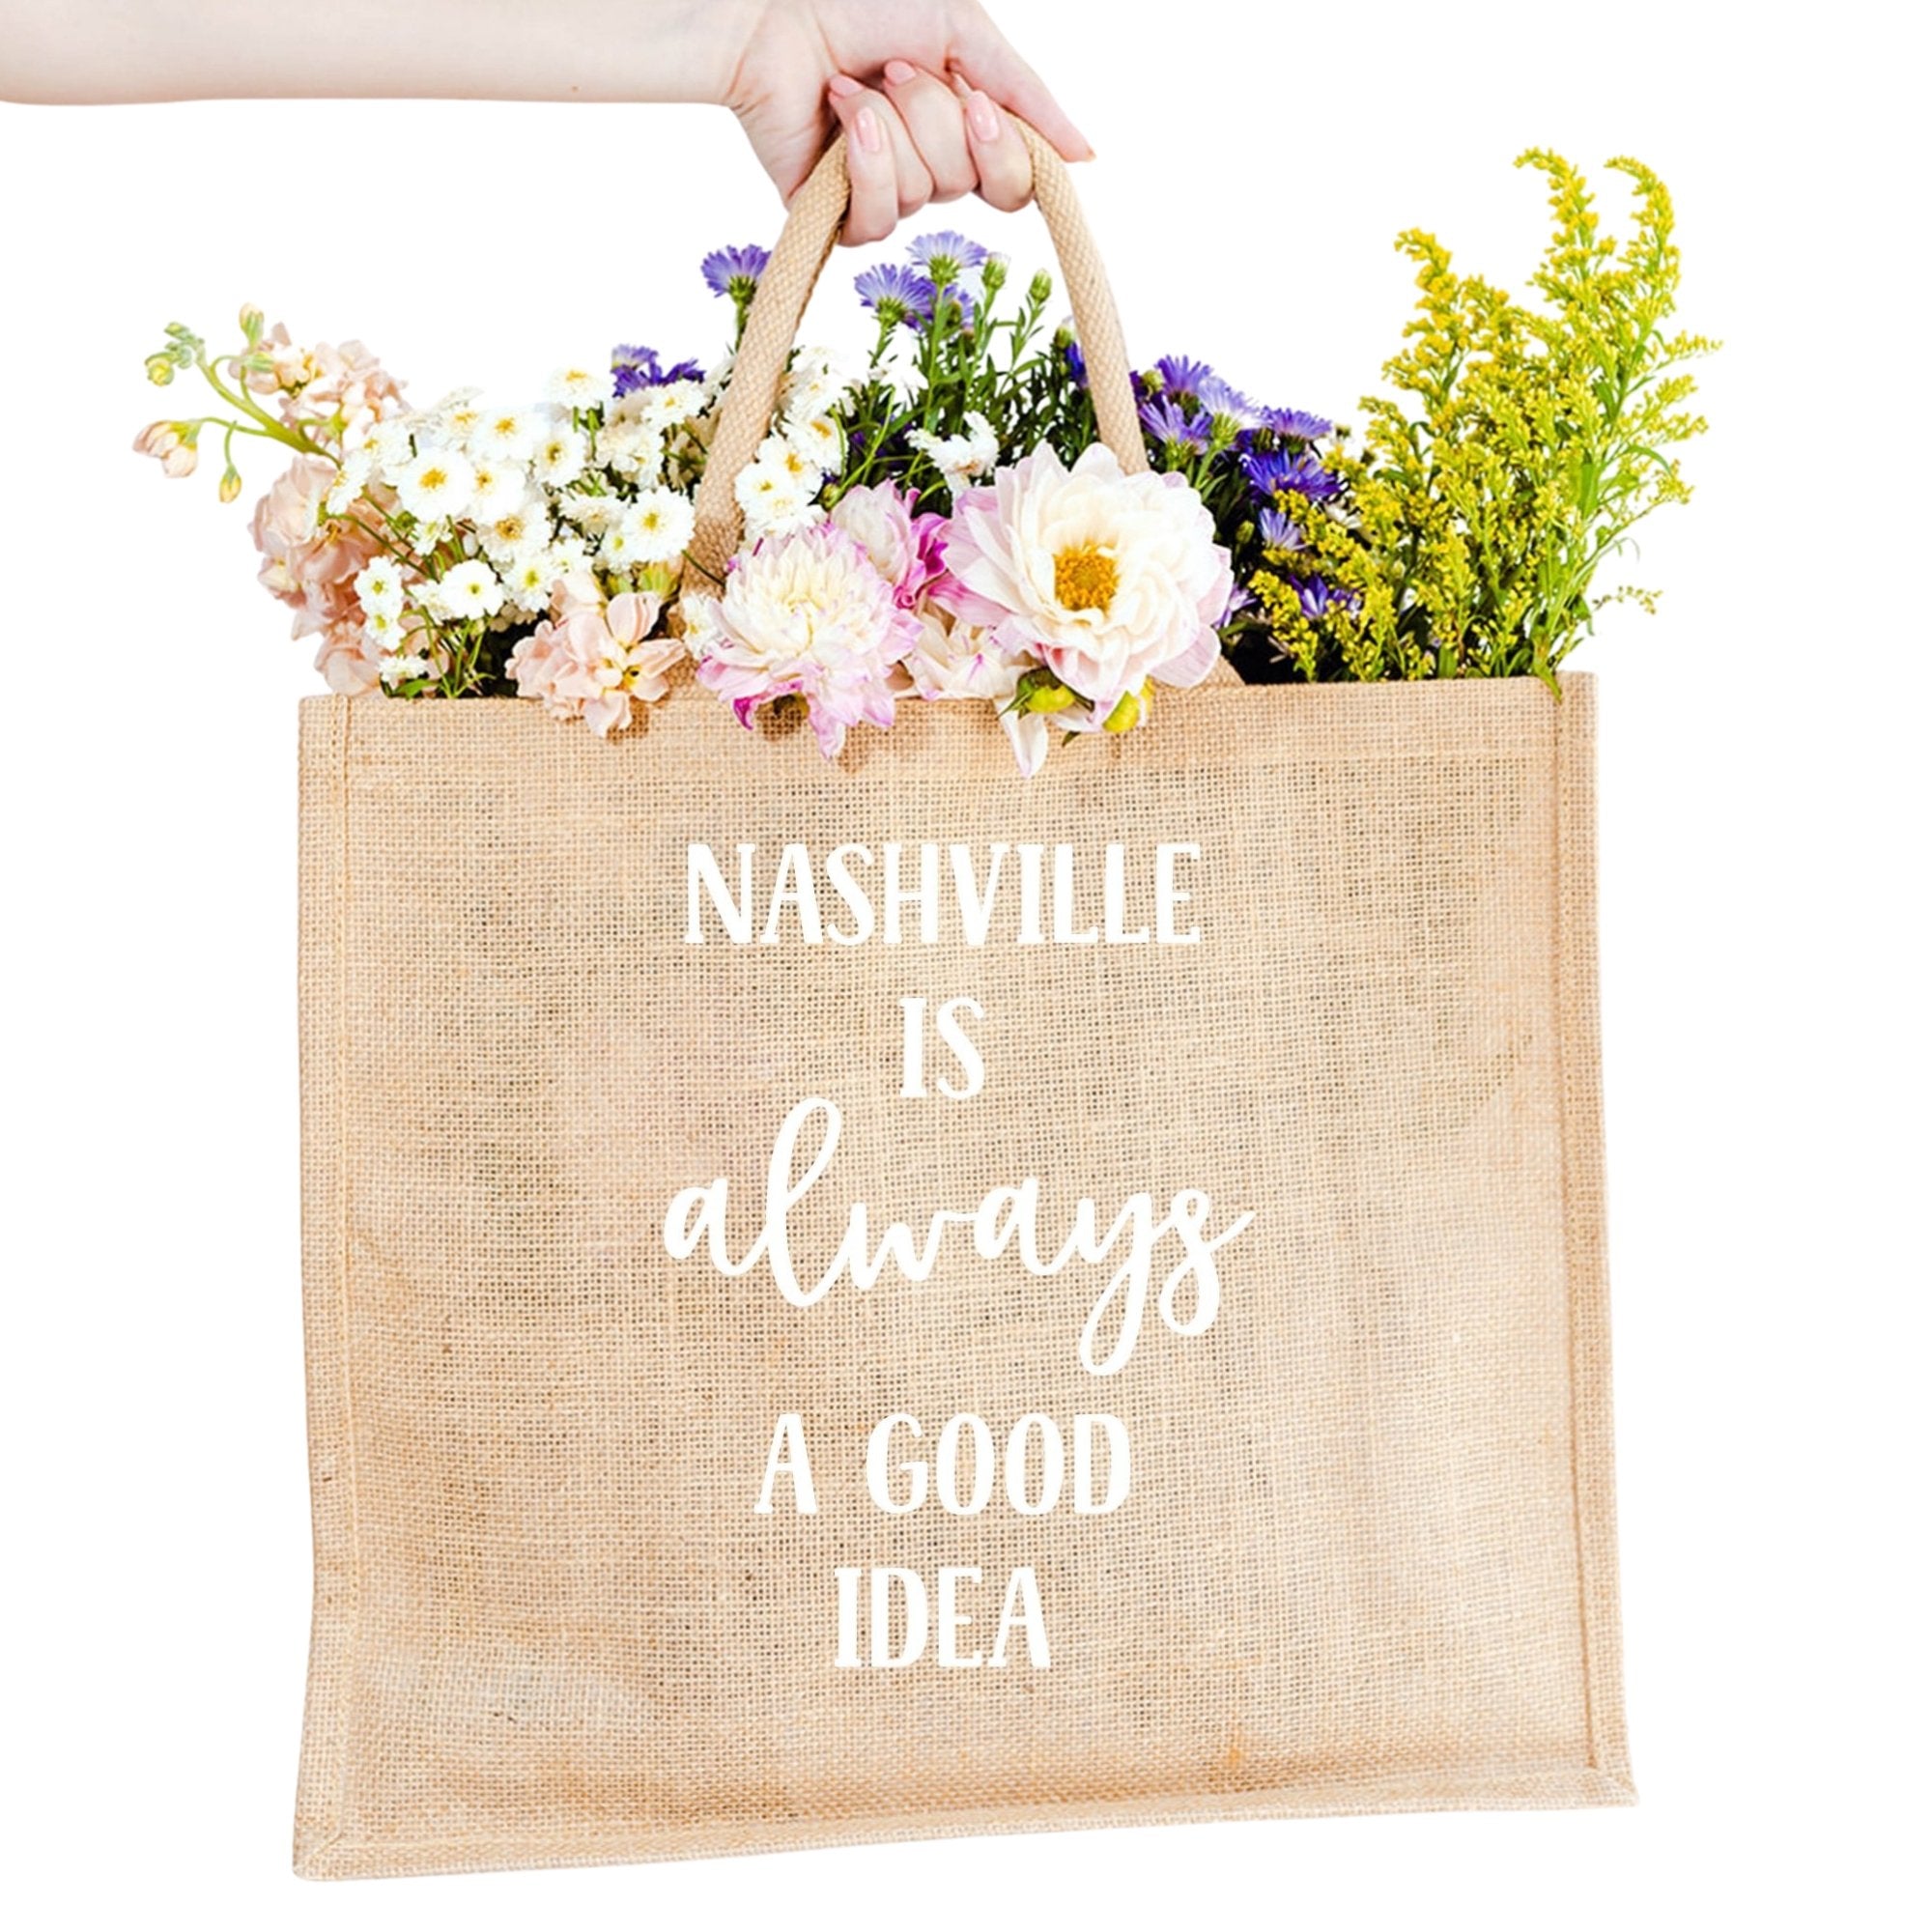 A custom jute bag reads "Nashville Is Always A Good Idea" on the front